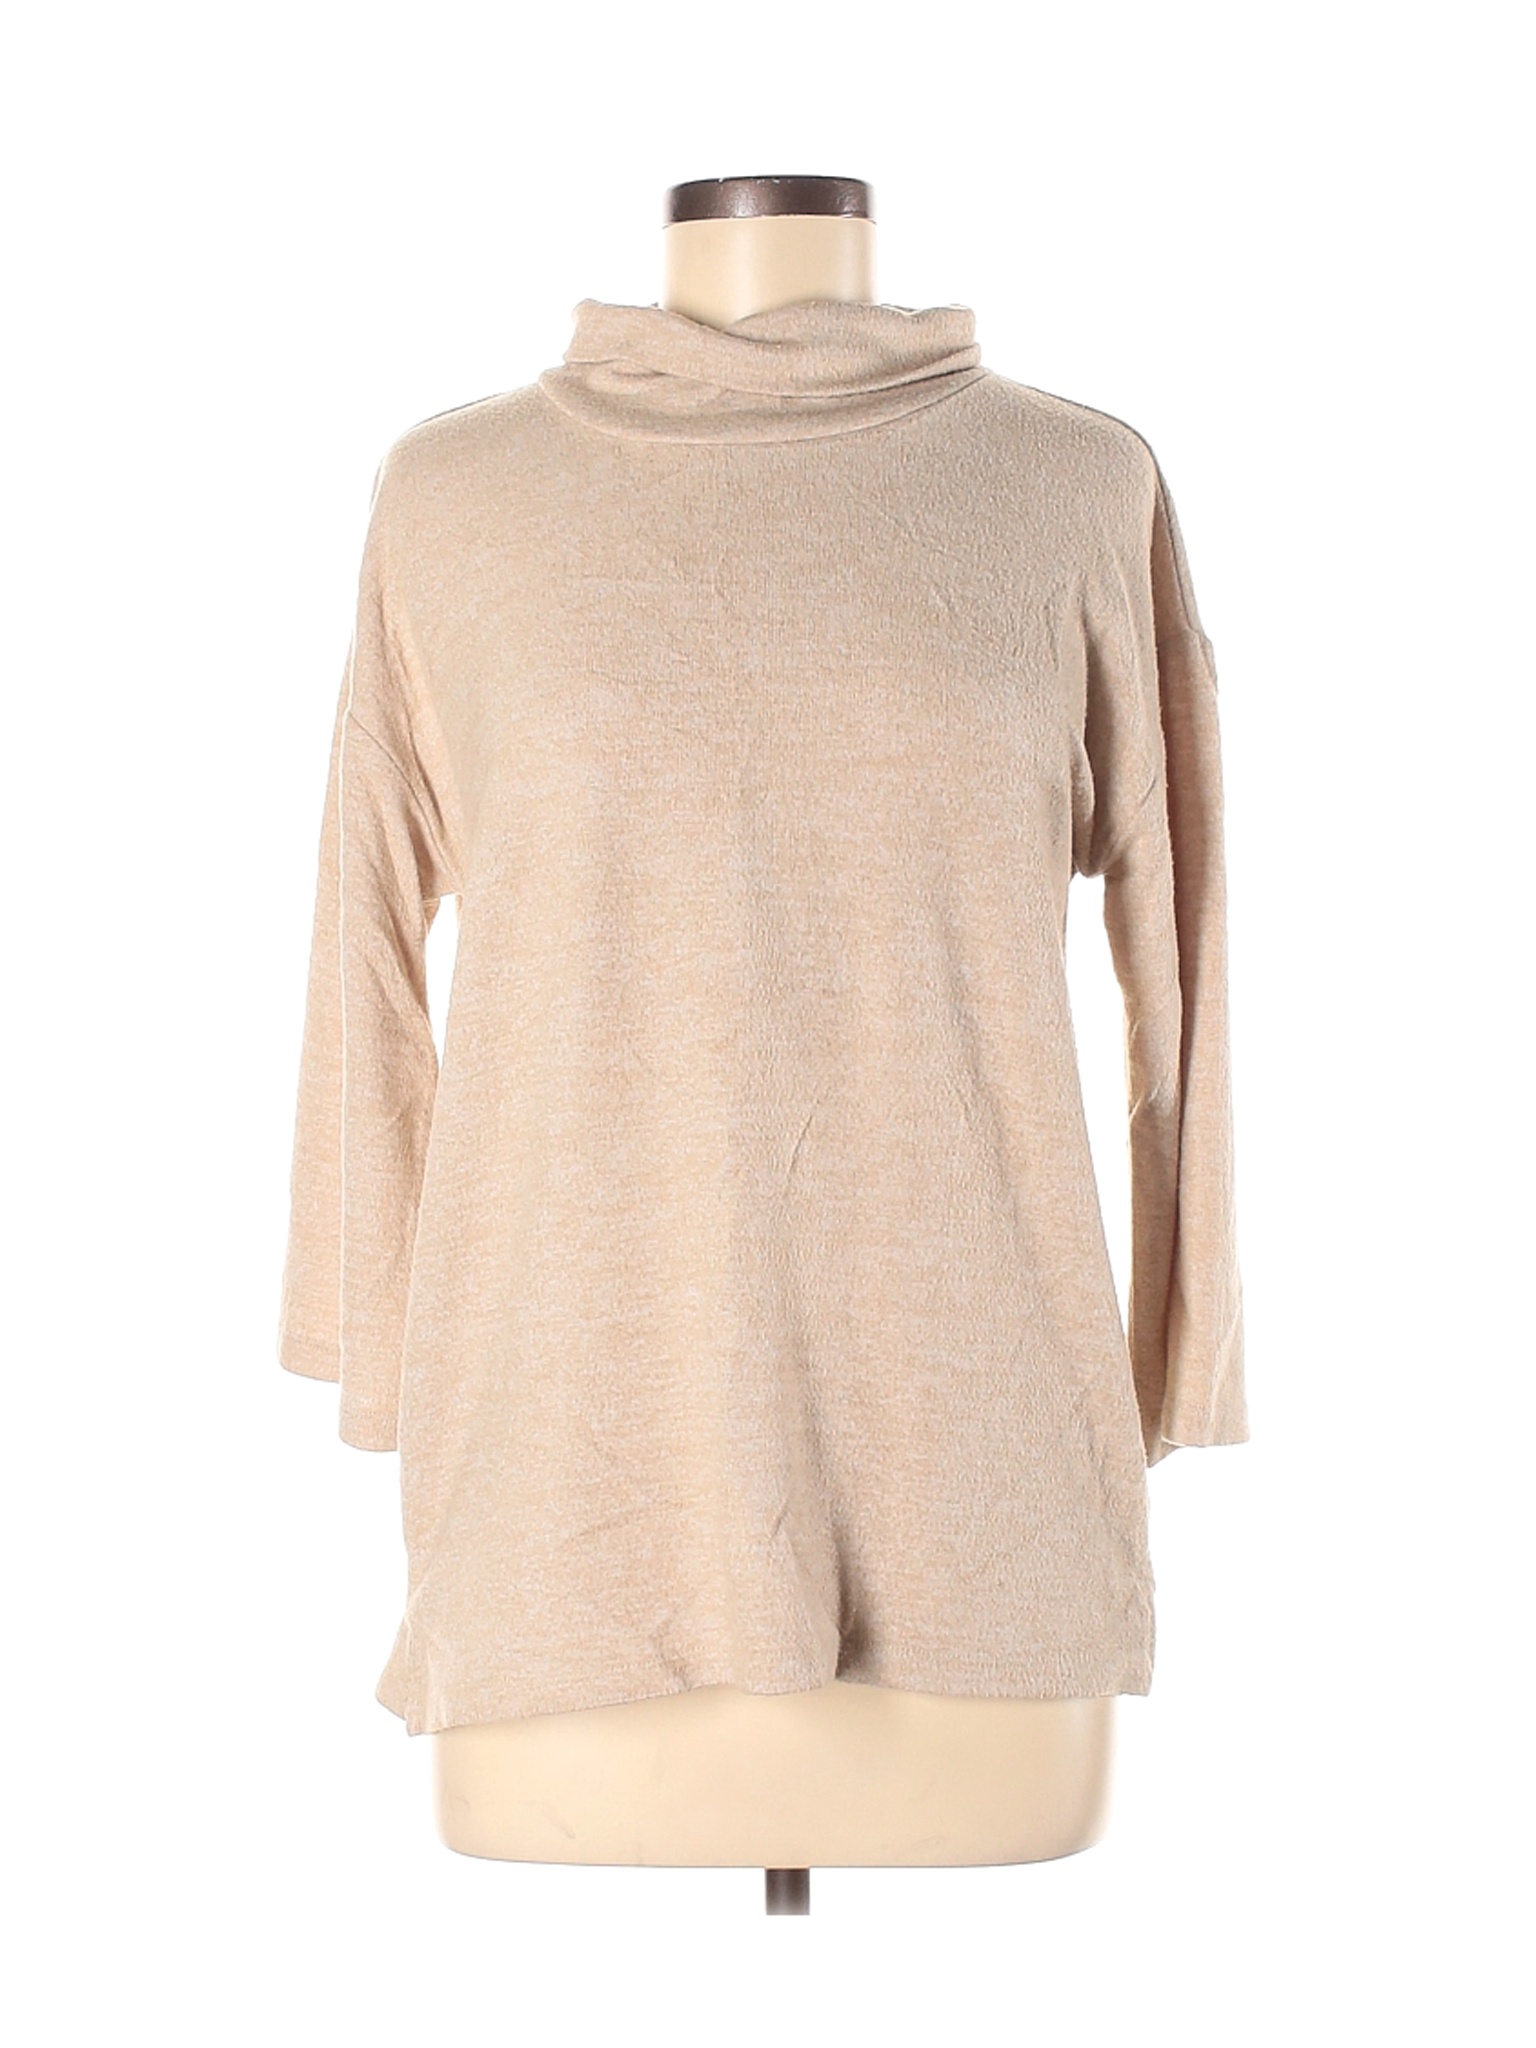 Workshop Republic Clothing Women Brown Turtleneck Sweater M | eBay